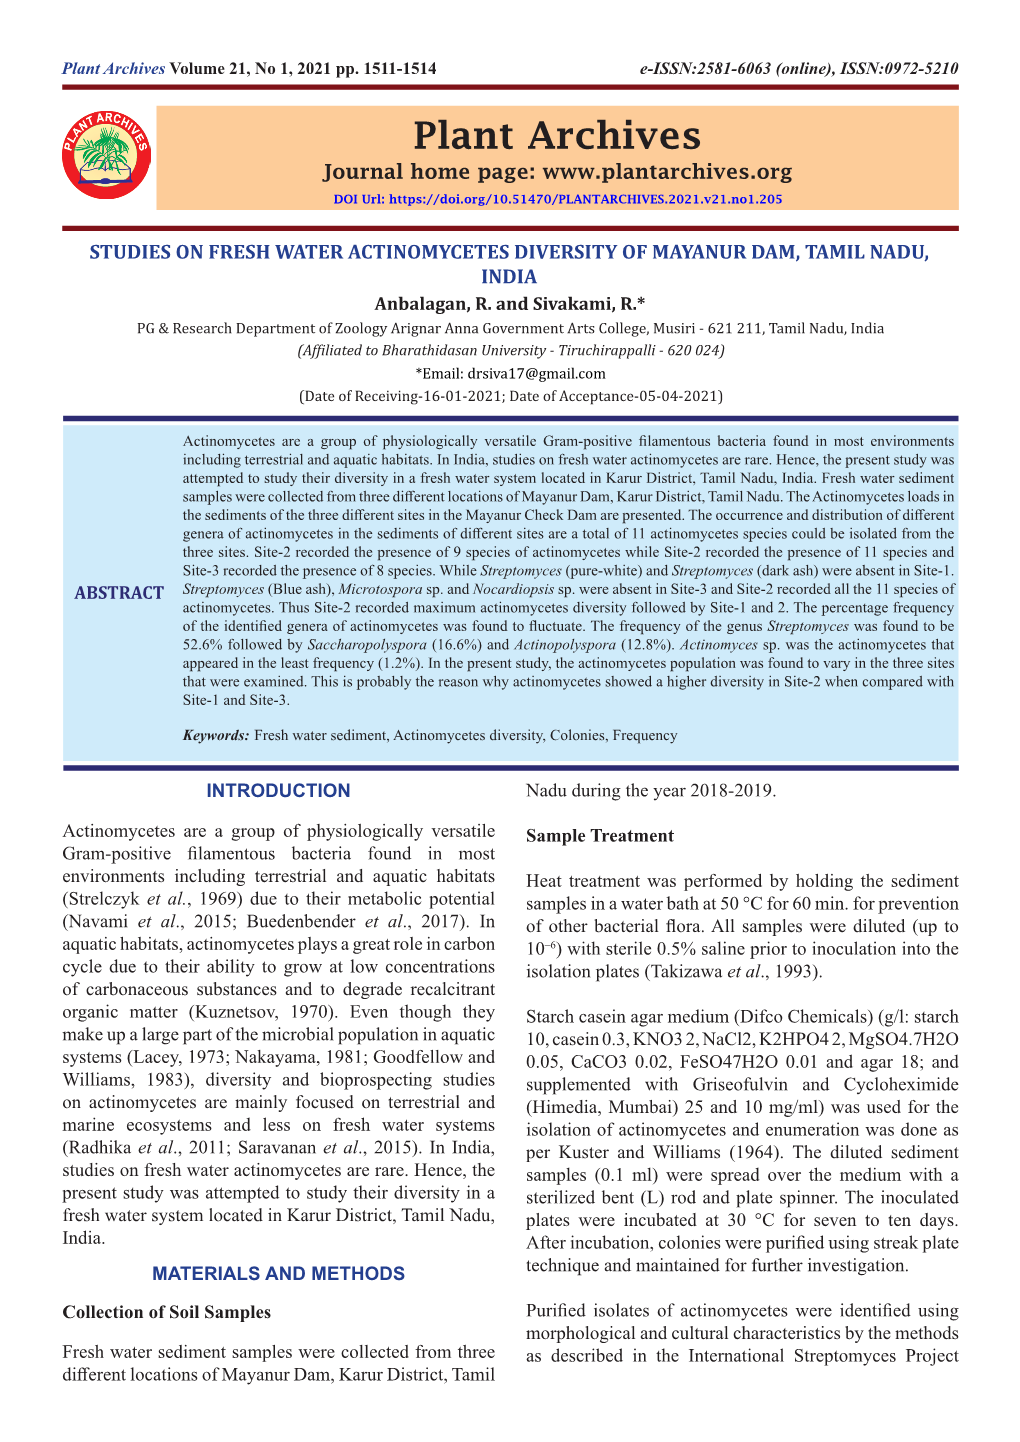 STUDIES on FRESH WATER ACTINOMYCETES DIVERSITY of MAYANUR DAM, TAMIL NADU, INDIA Anbalagan, R